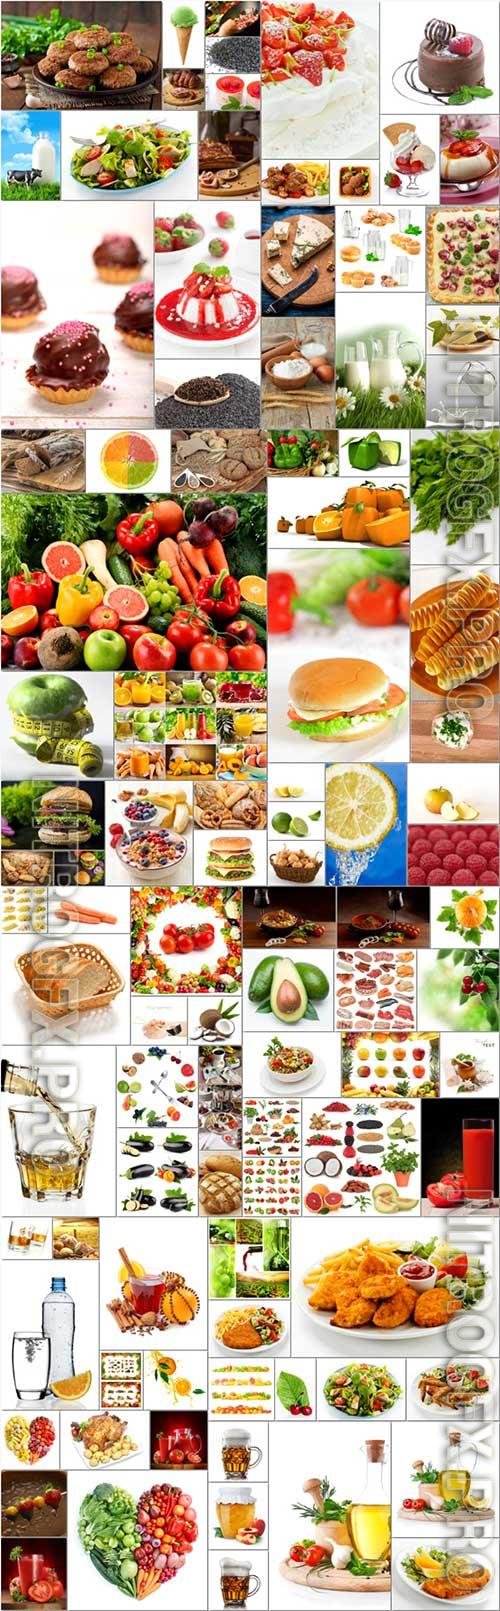 Food, meat, vegetables, fruits, fish, stock photo bundle vol 8